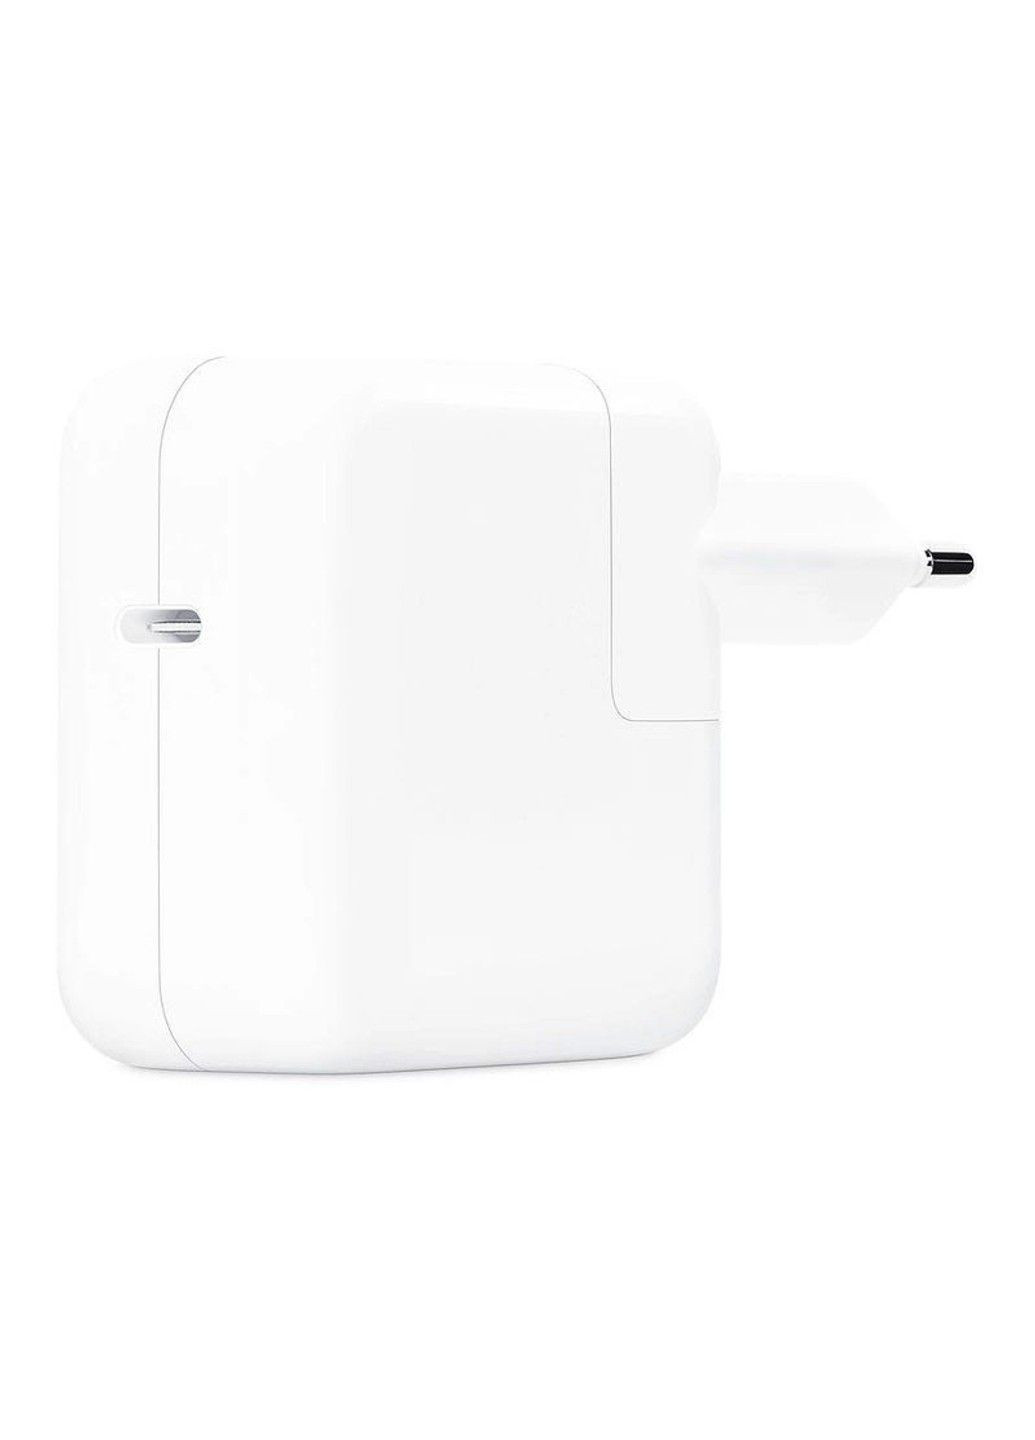 Уценка СЗУ 30W USB-C Power Adapter for Apple (AAA) (box) Brand_A_Class (294725541)